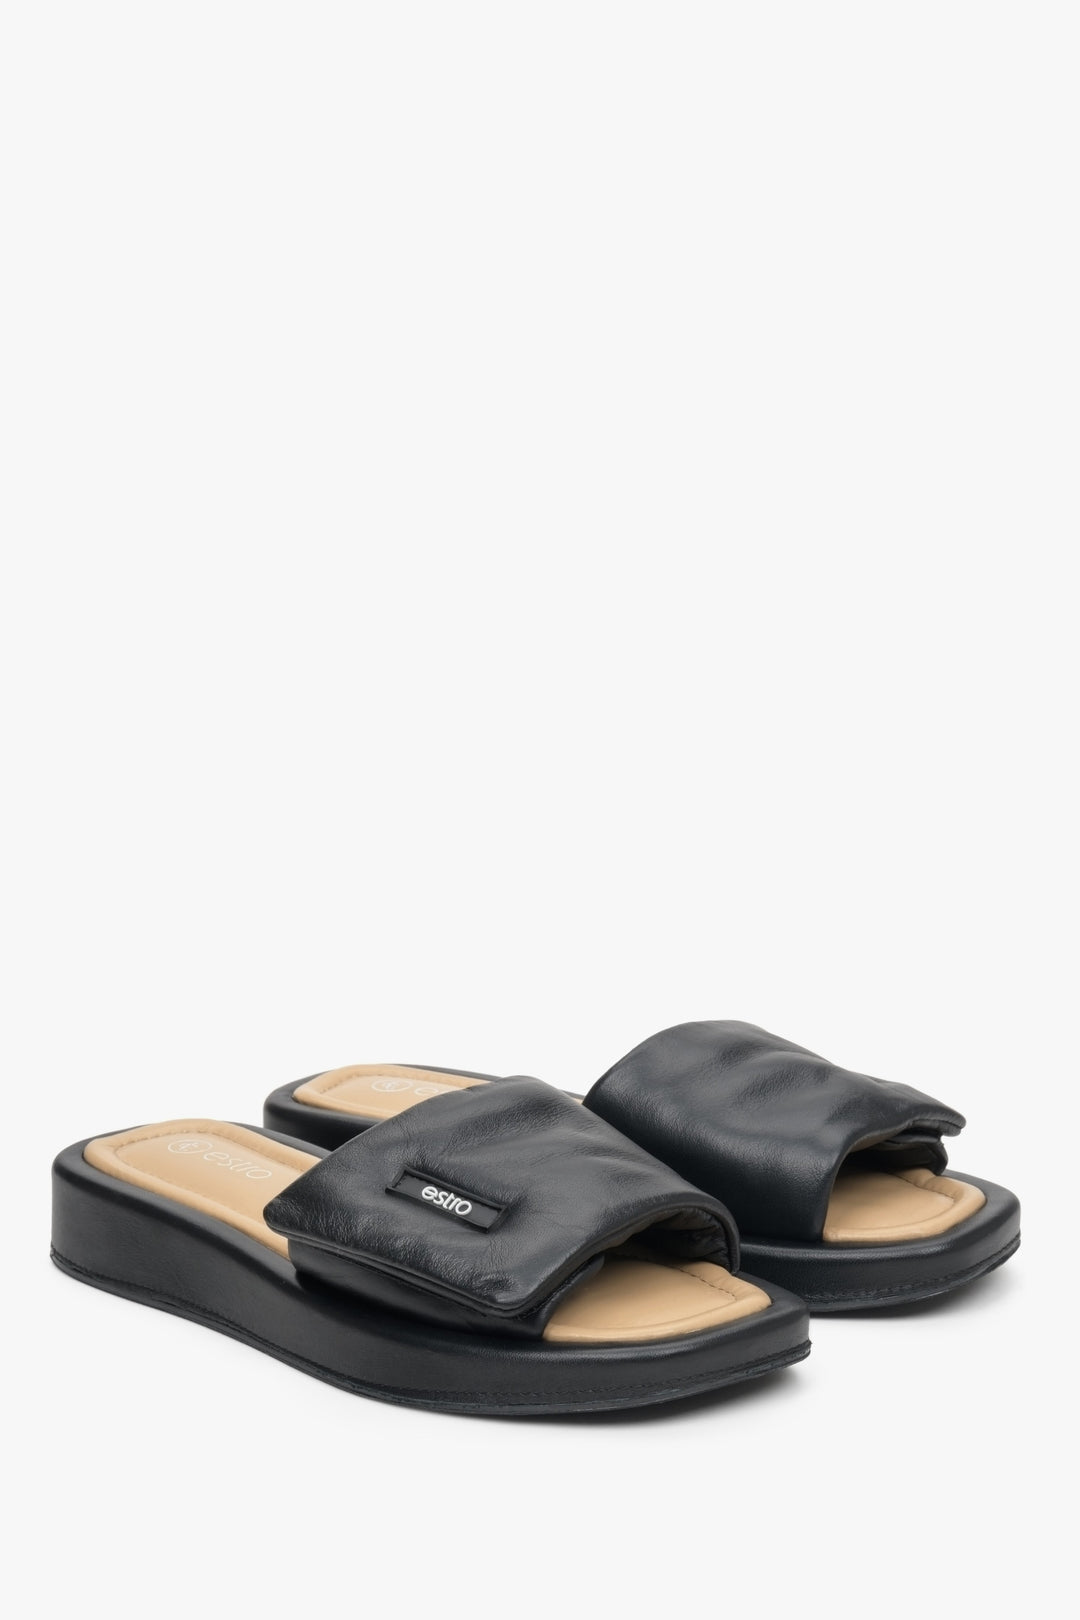 Women's leather slide sandals by Estro in black.